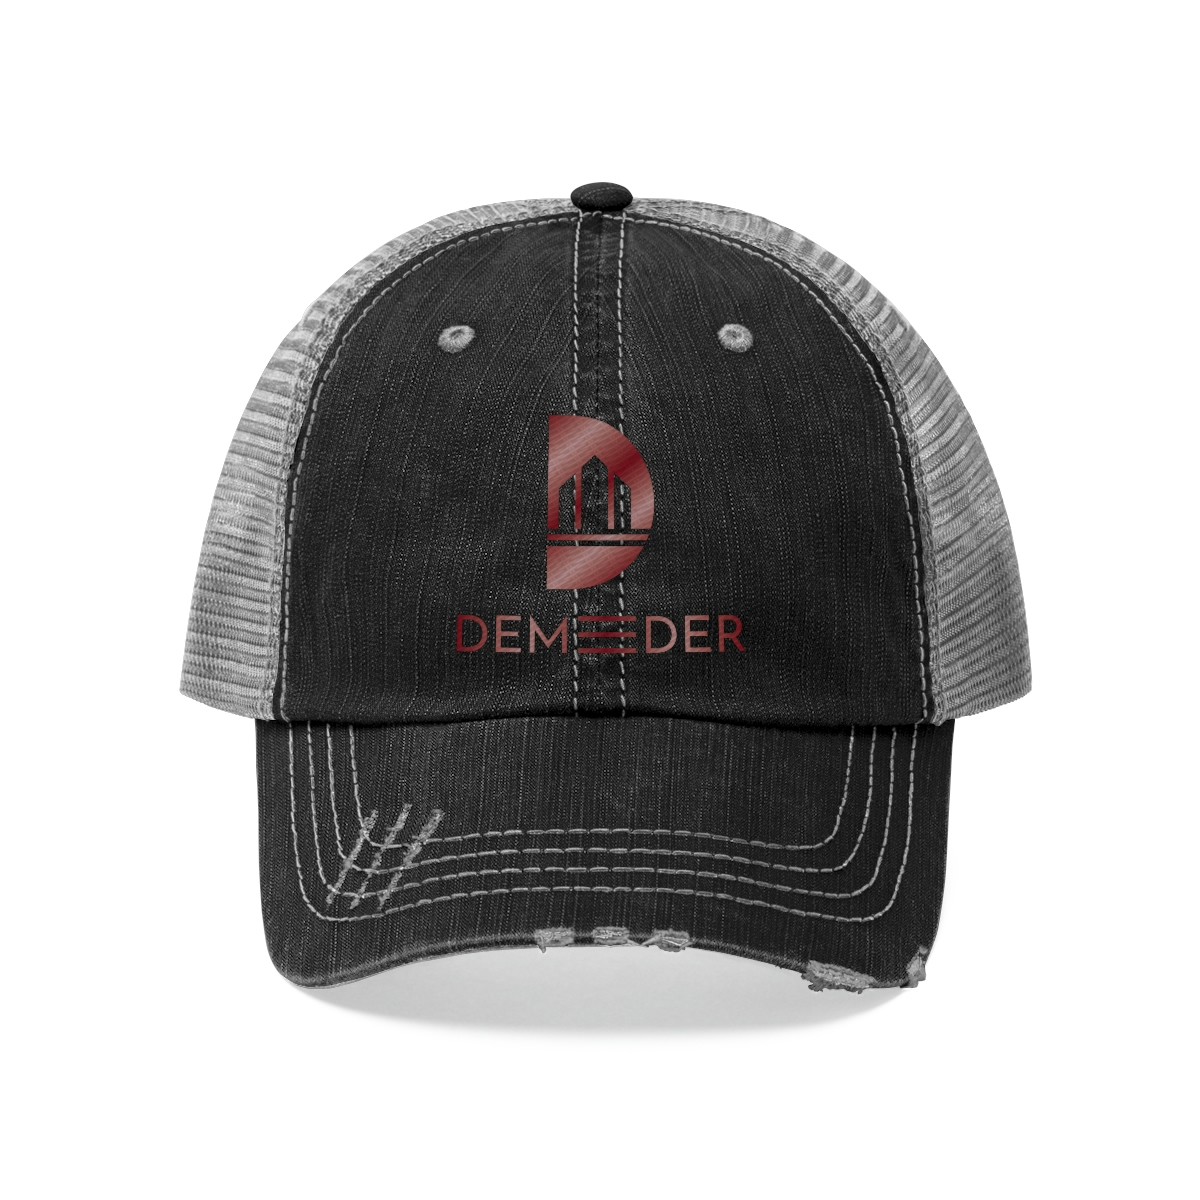 Demeeder distressed cap